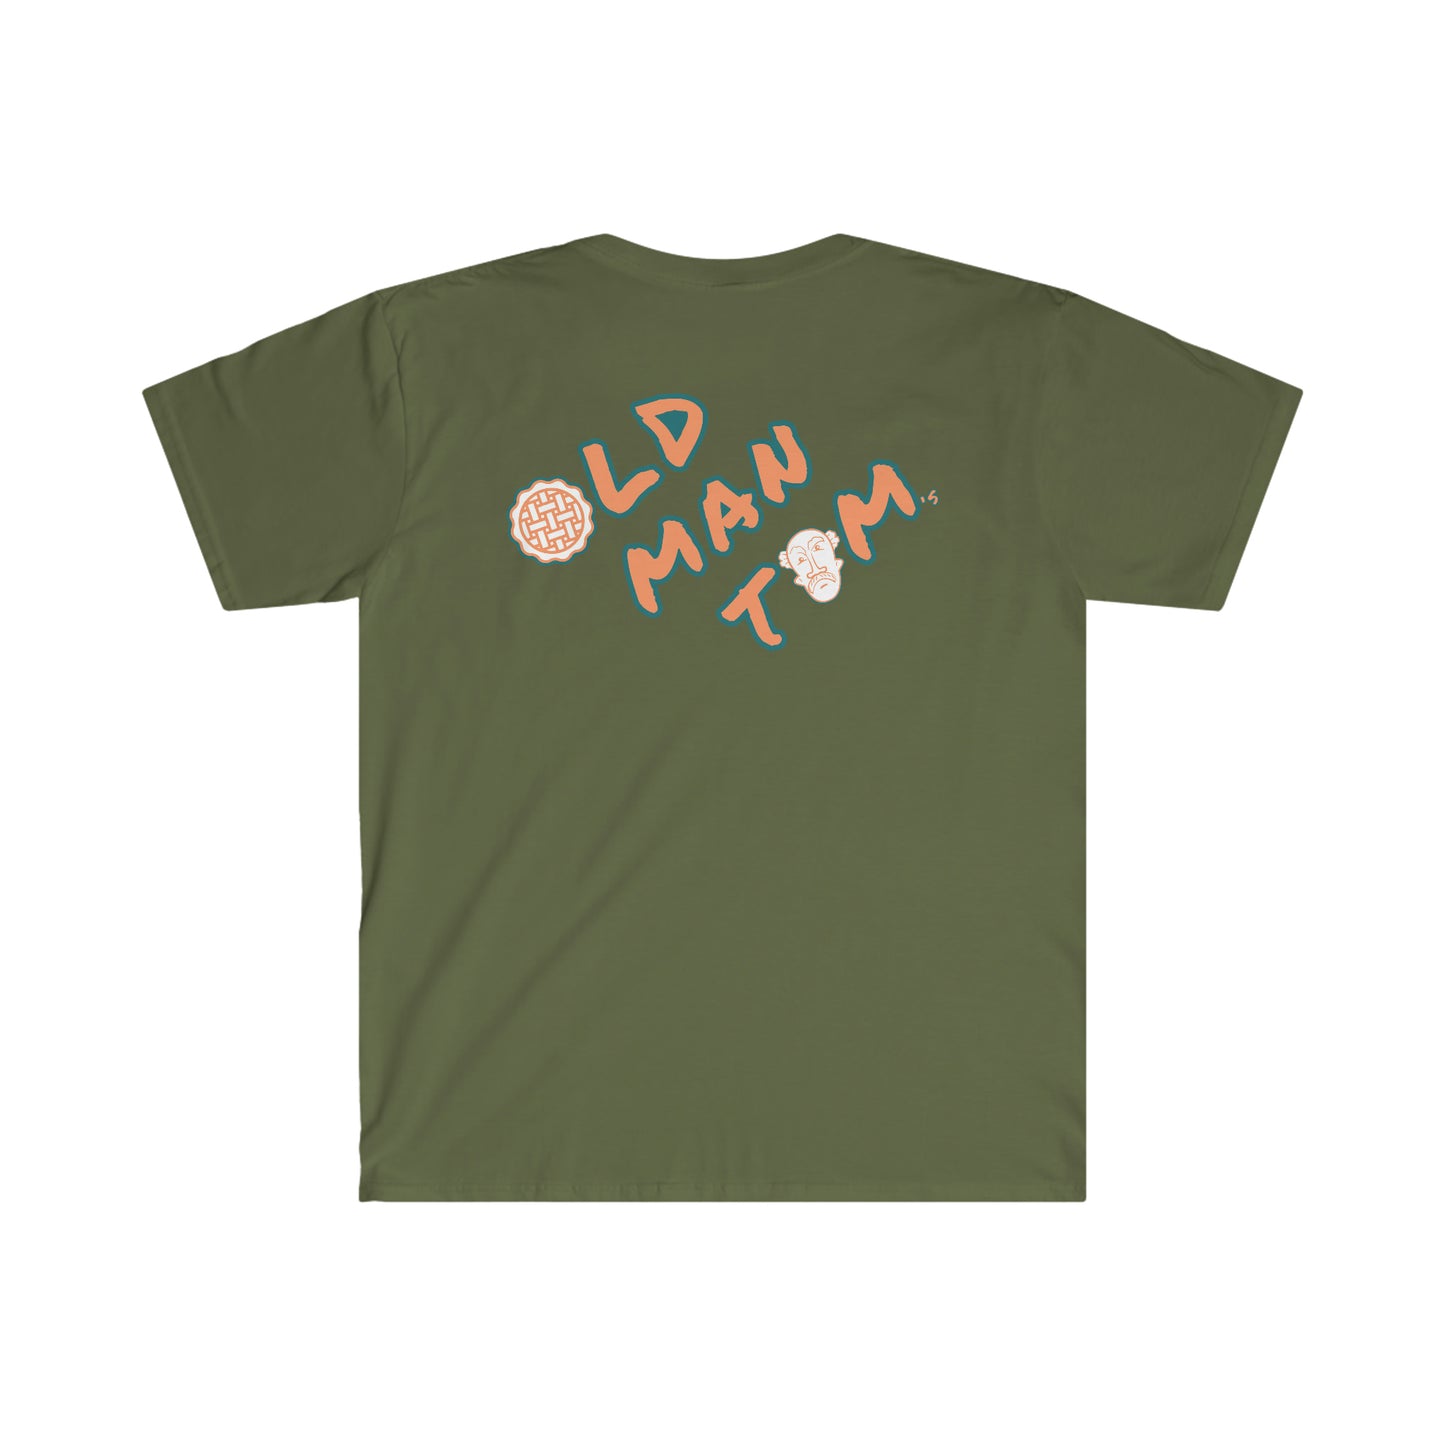 Old Man Tom's "Falling" Unisex Softstyle T-Shirt